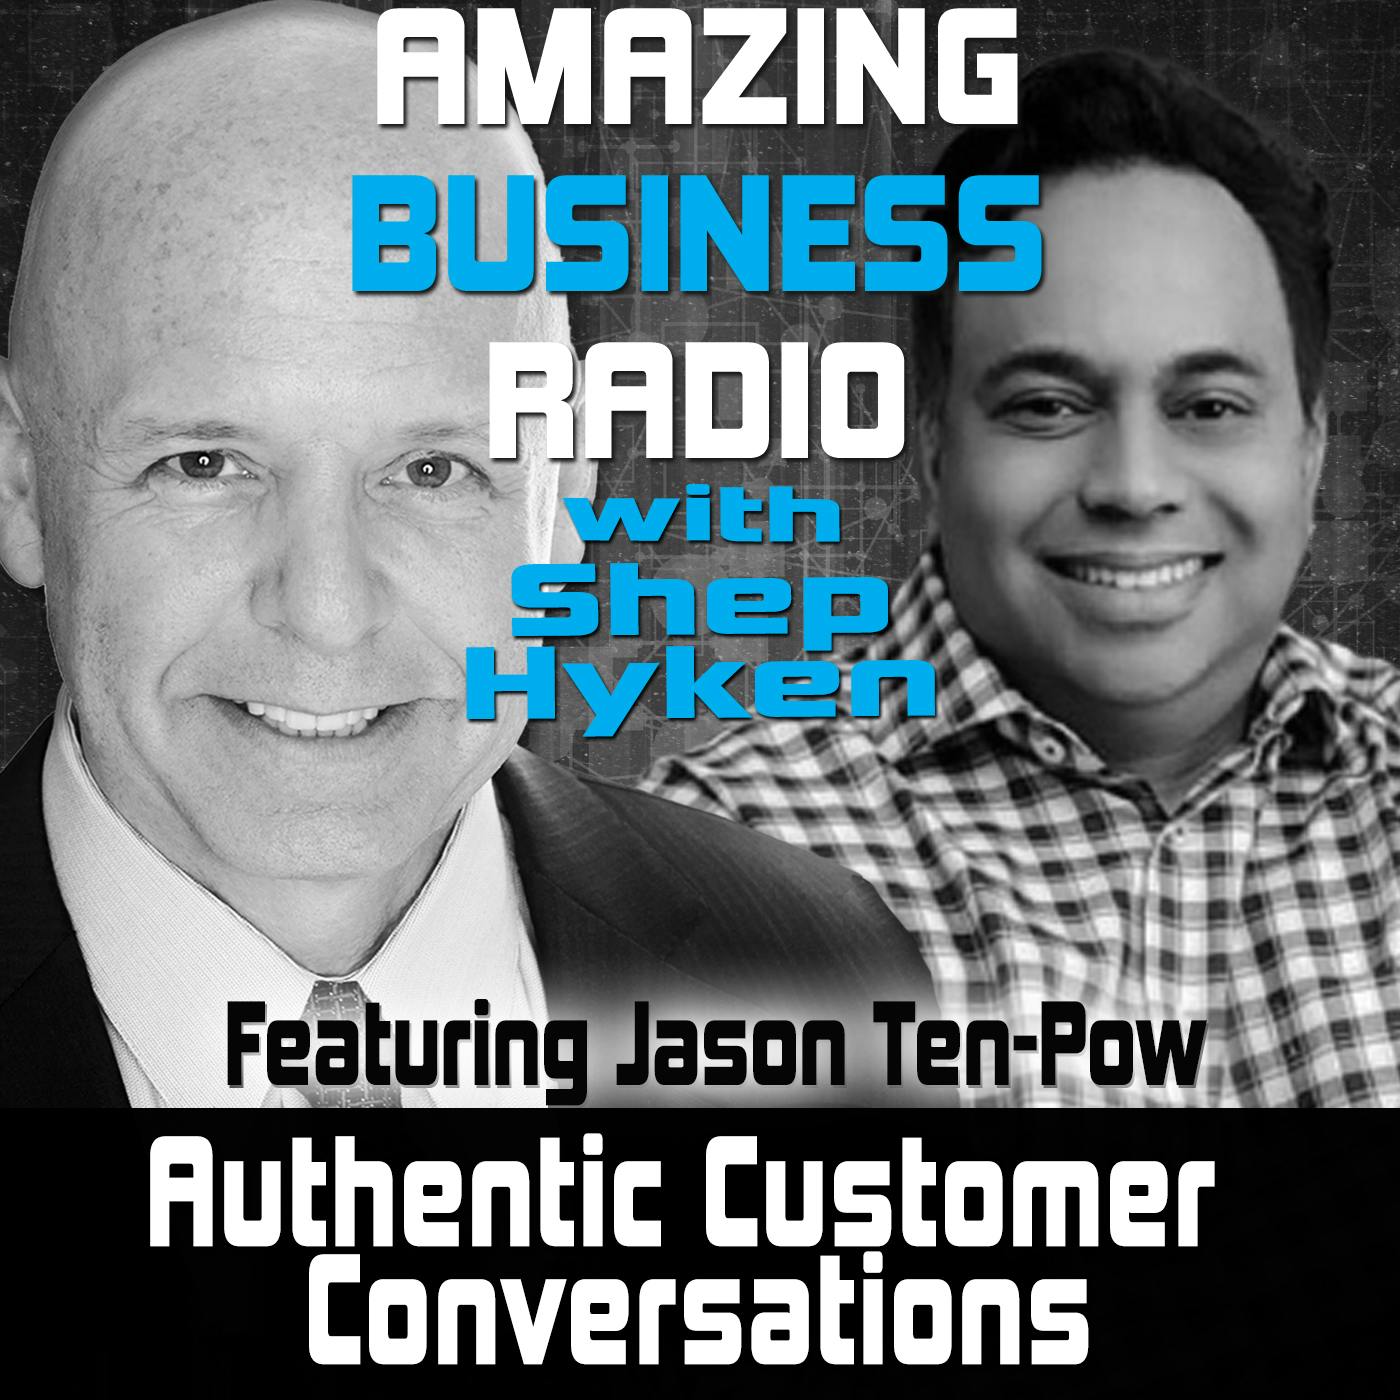 Authentic Customer Conversations Featruing Jason Ten-Pow